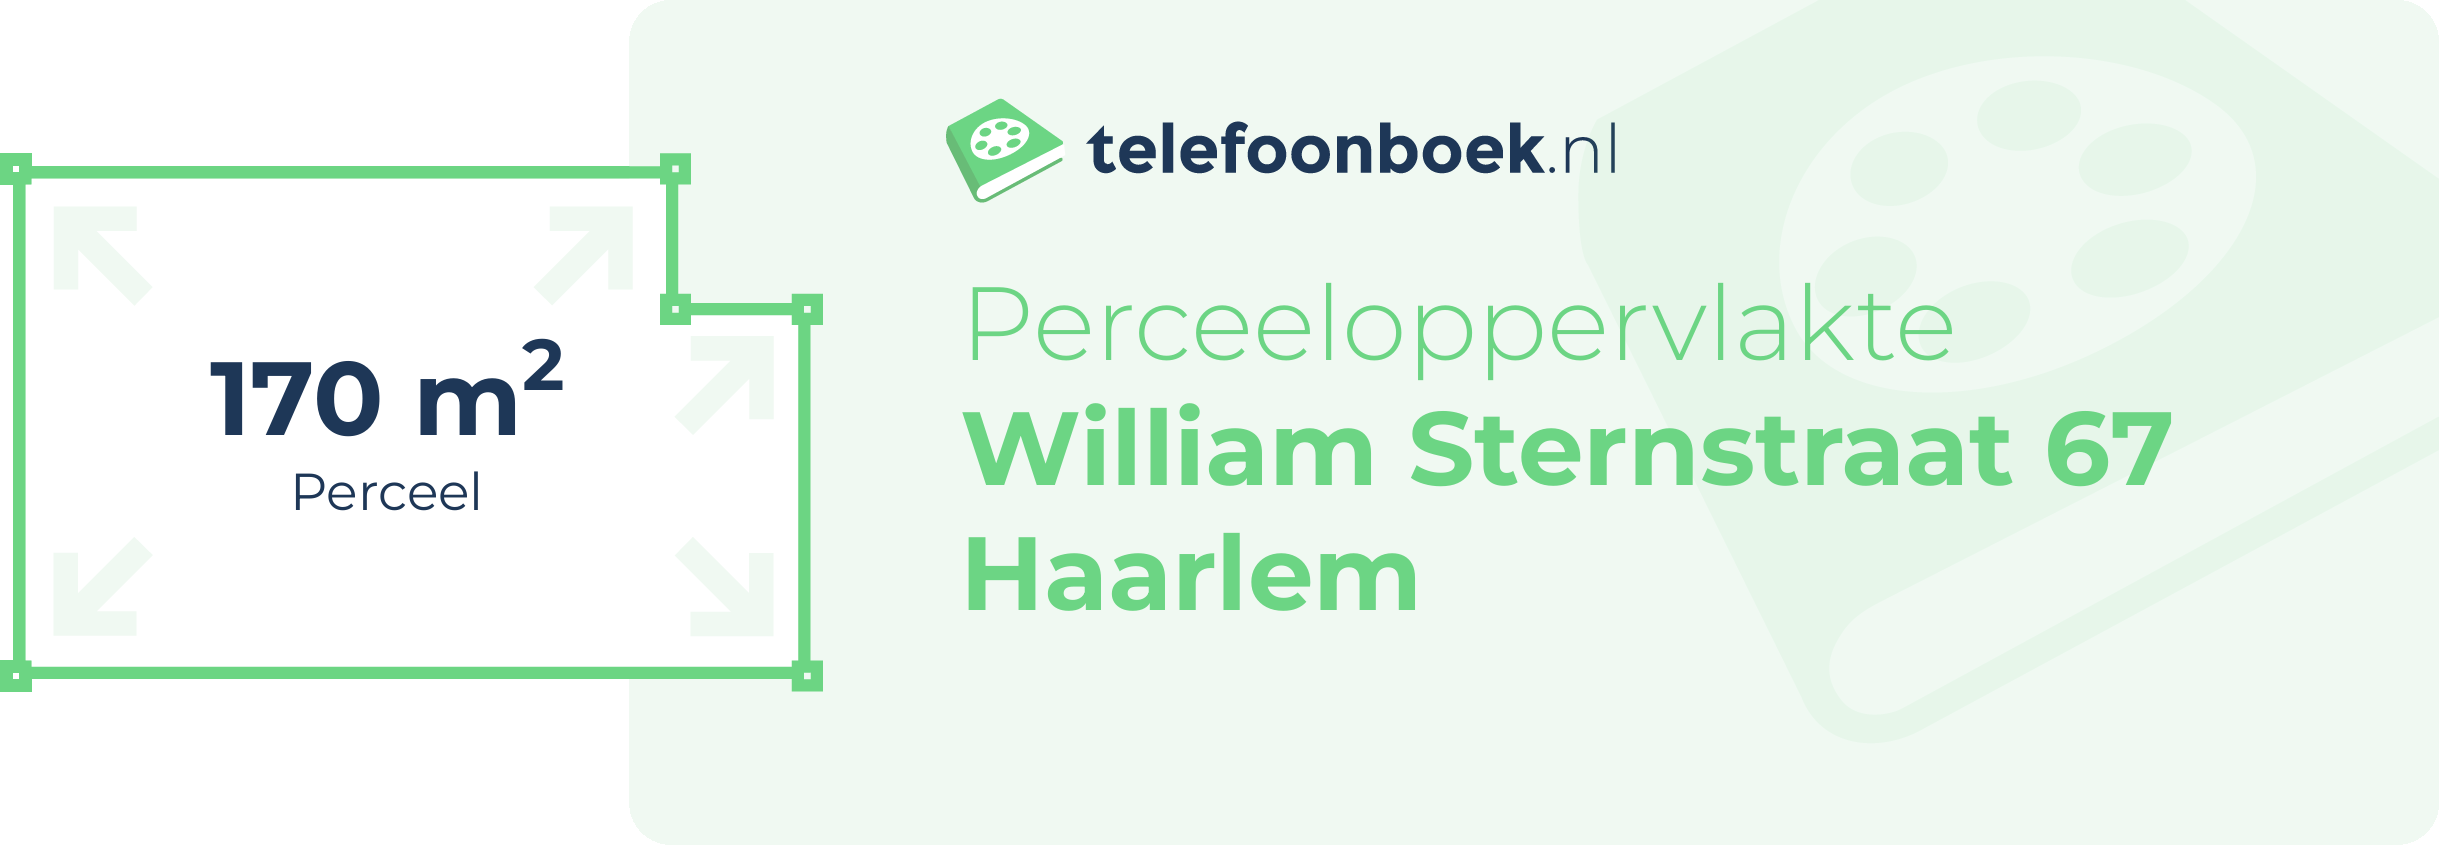 Perceeloppervlakte William Sternstraat 67 Haarlem